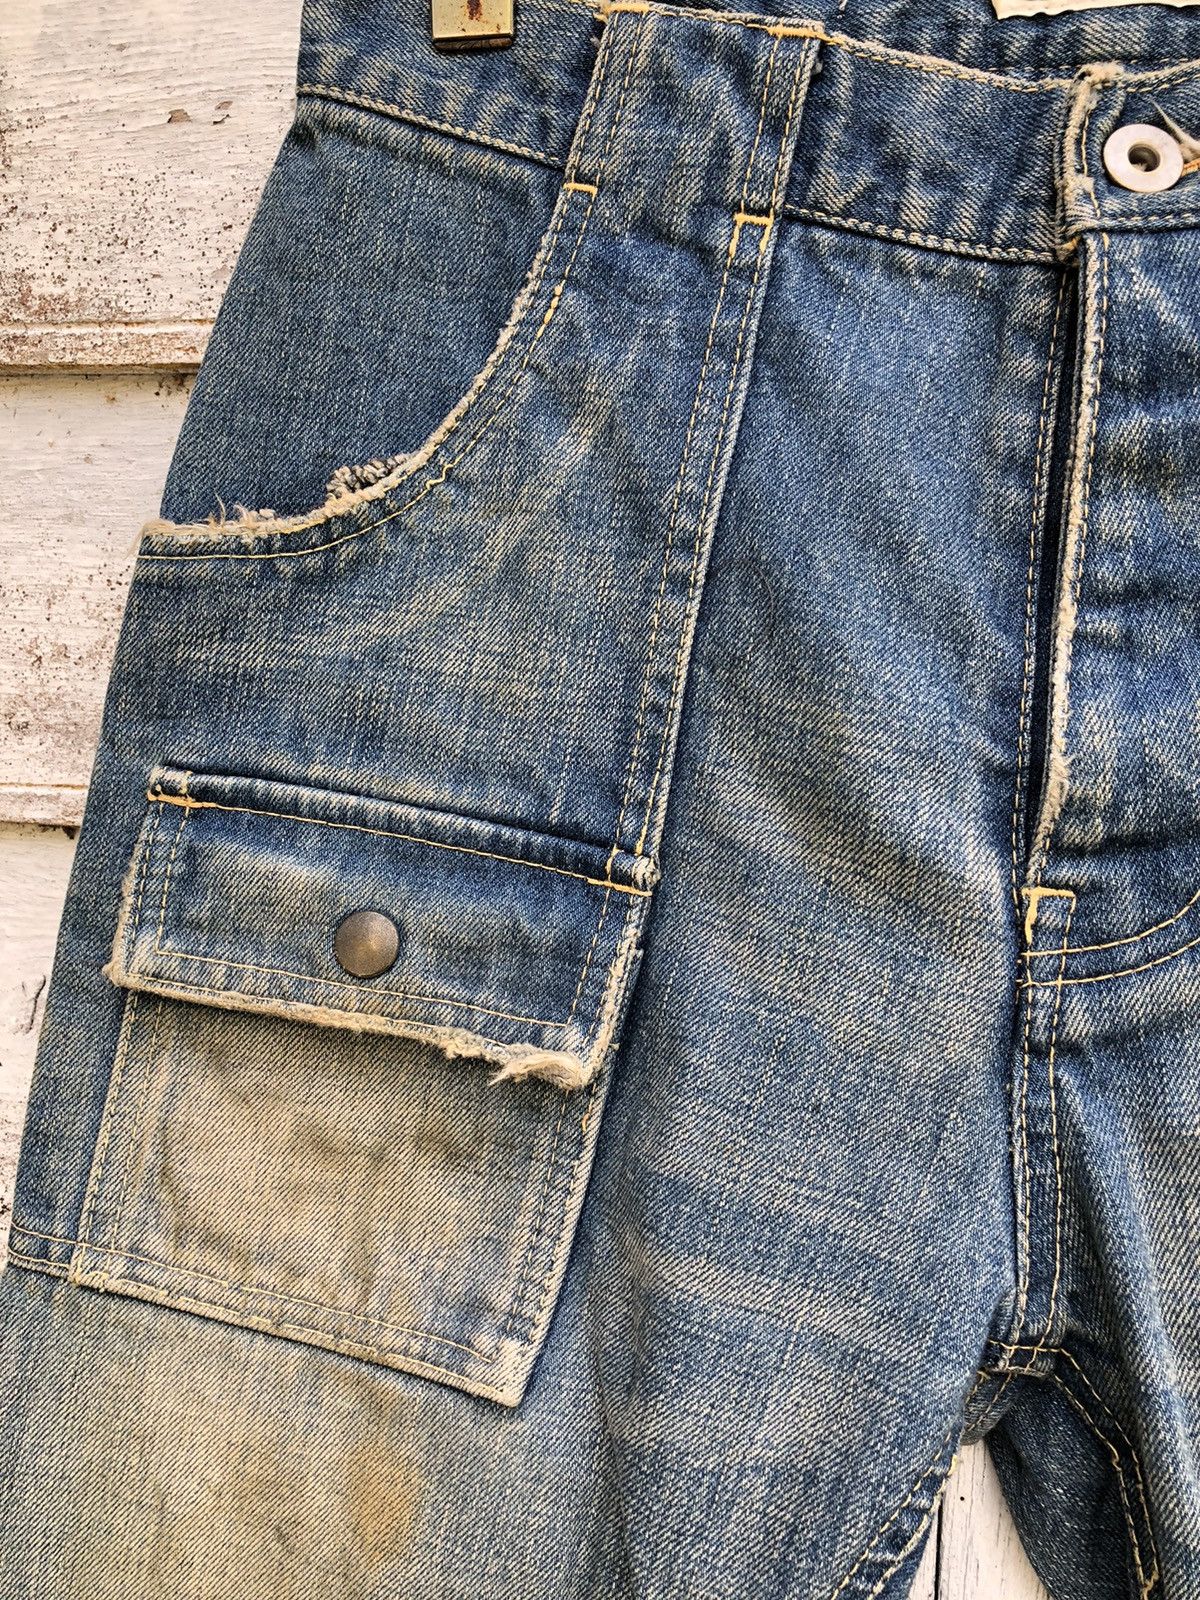 💯Felir💯Discovered Distressed Bush Pocket Pant Jean - 4